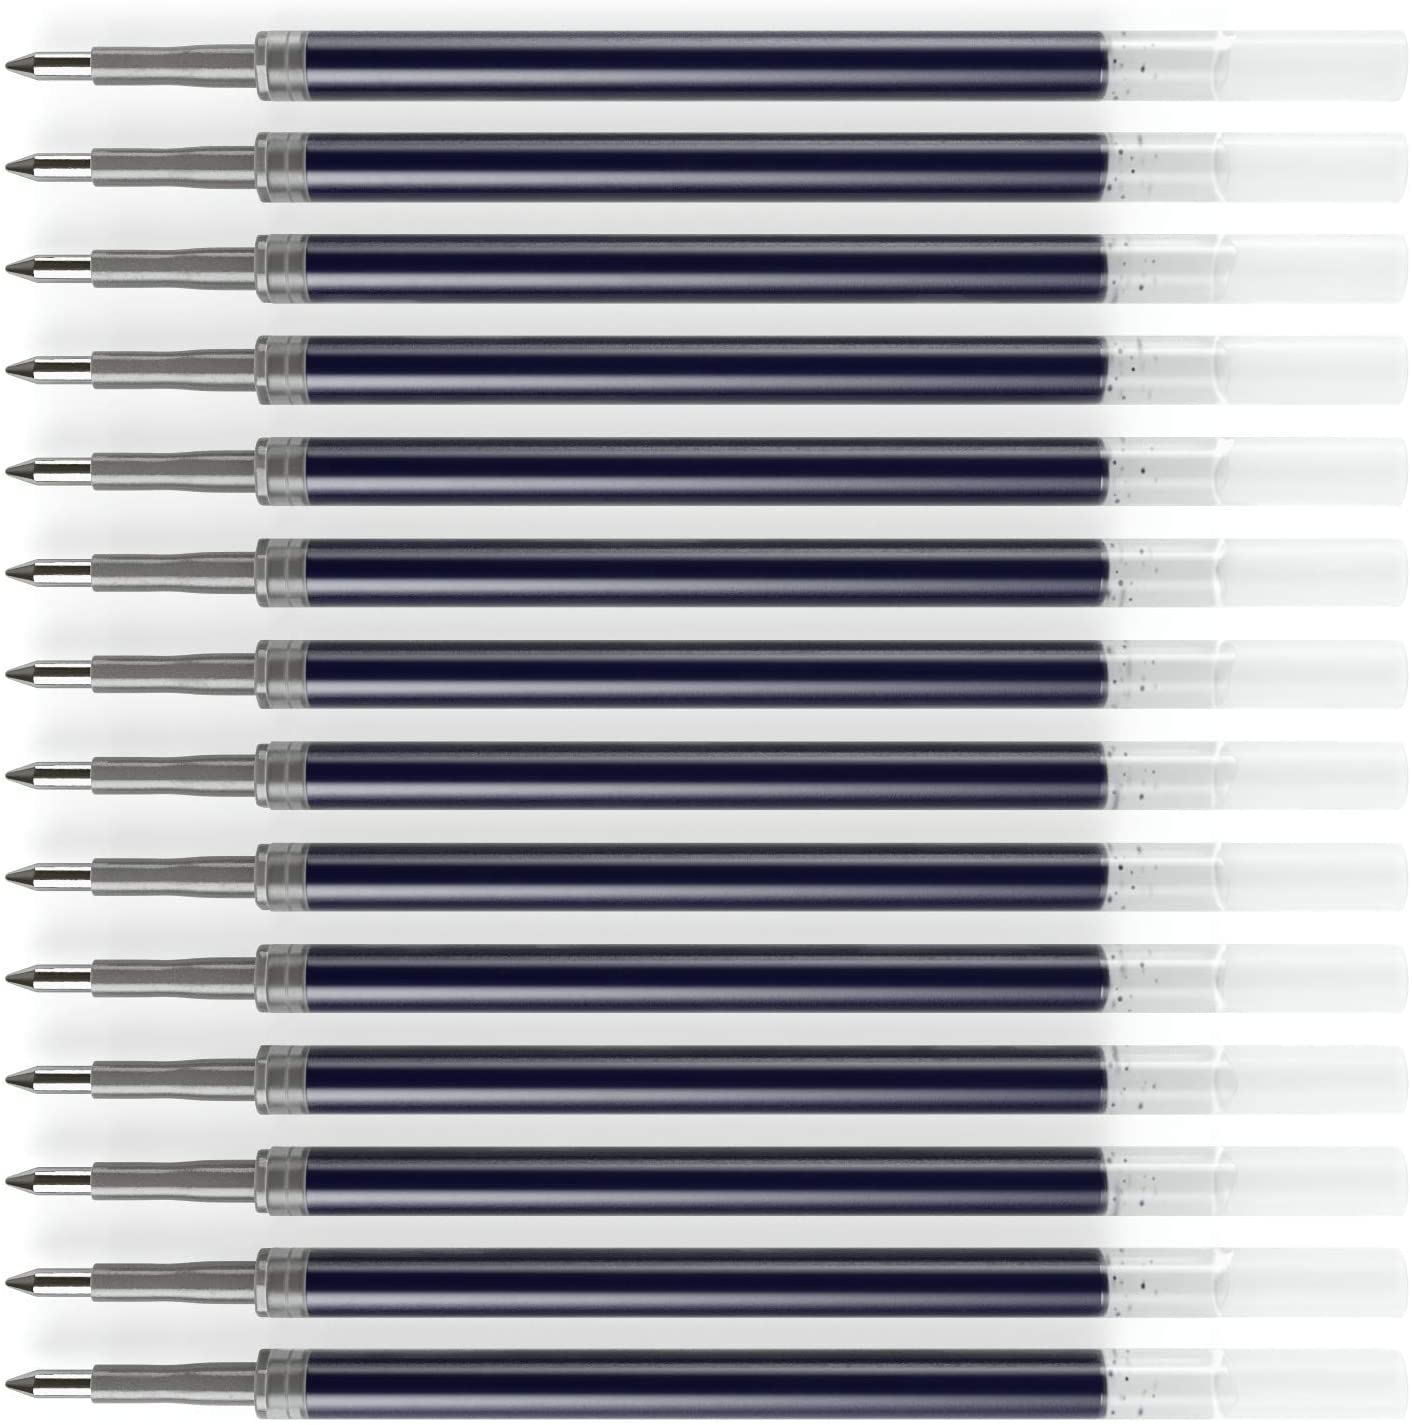 Gel Ink Pen Refills, Blue - Pack of 50